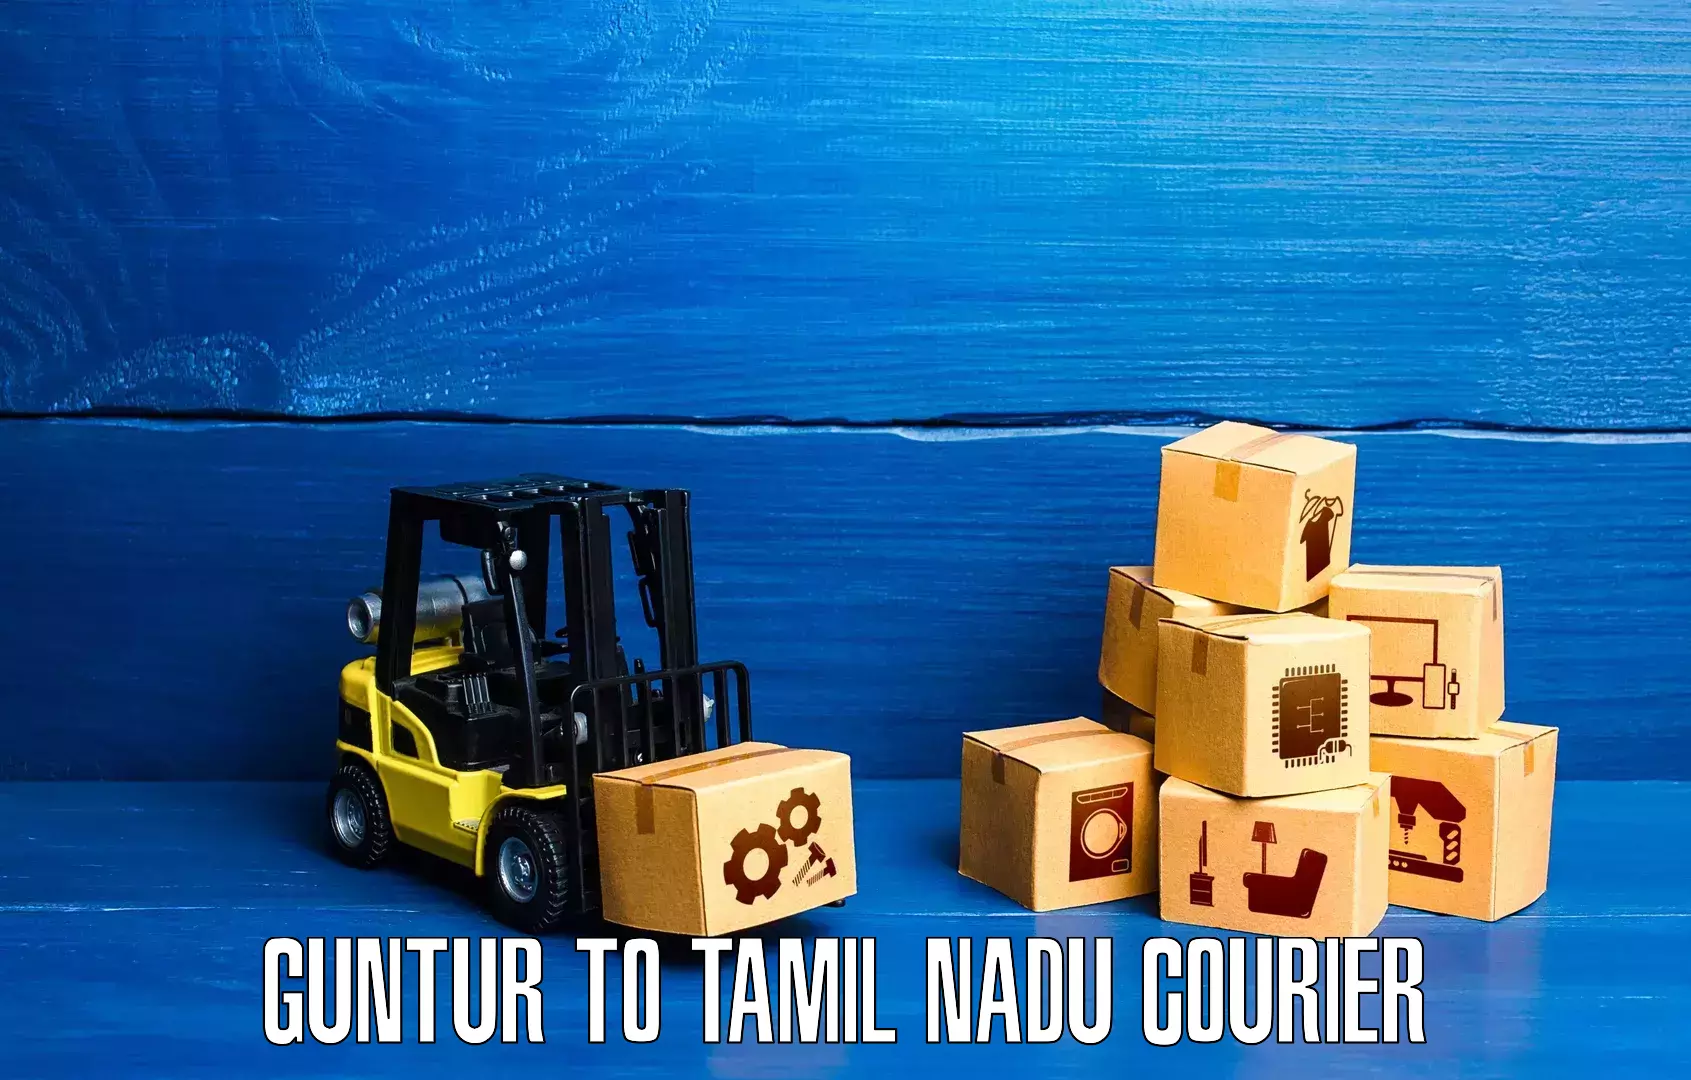 Efficient order fulfillment in Guntur to Tamil Nadu